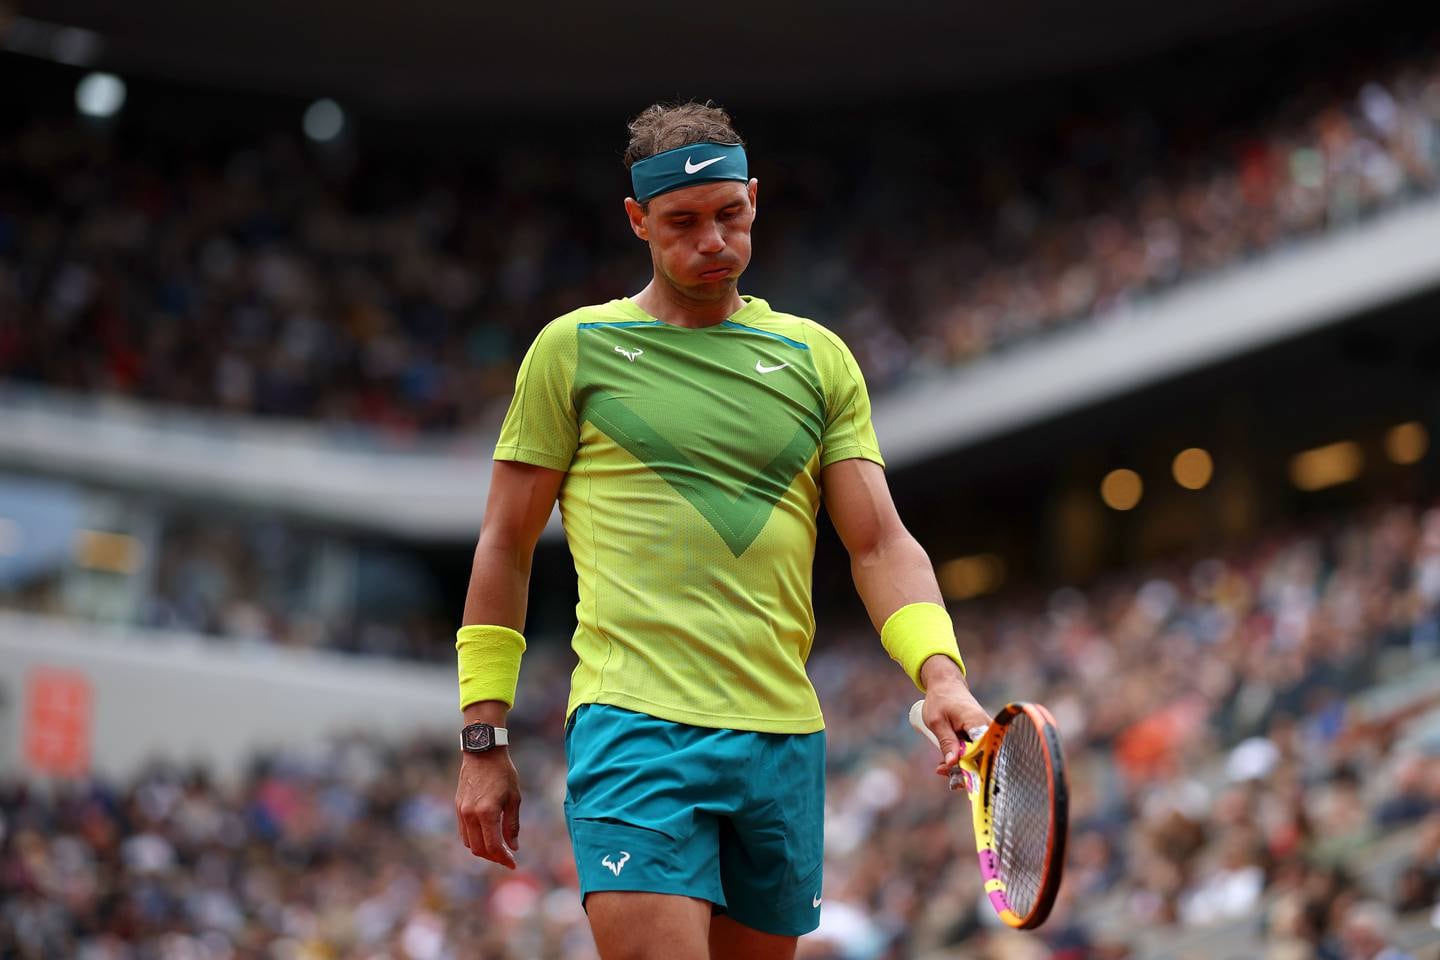 Rafael Nadal described Wimbledon's decison as 'very unfair'. Getty